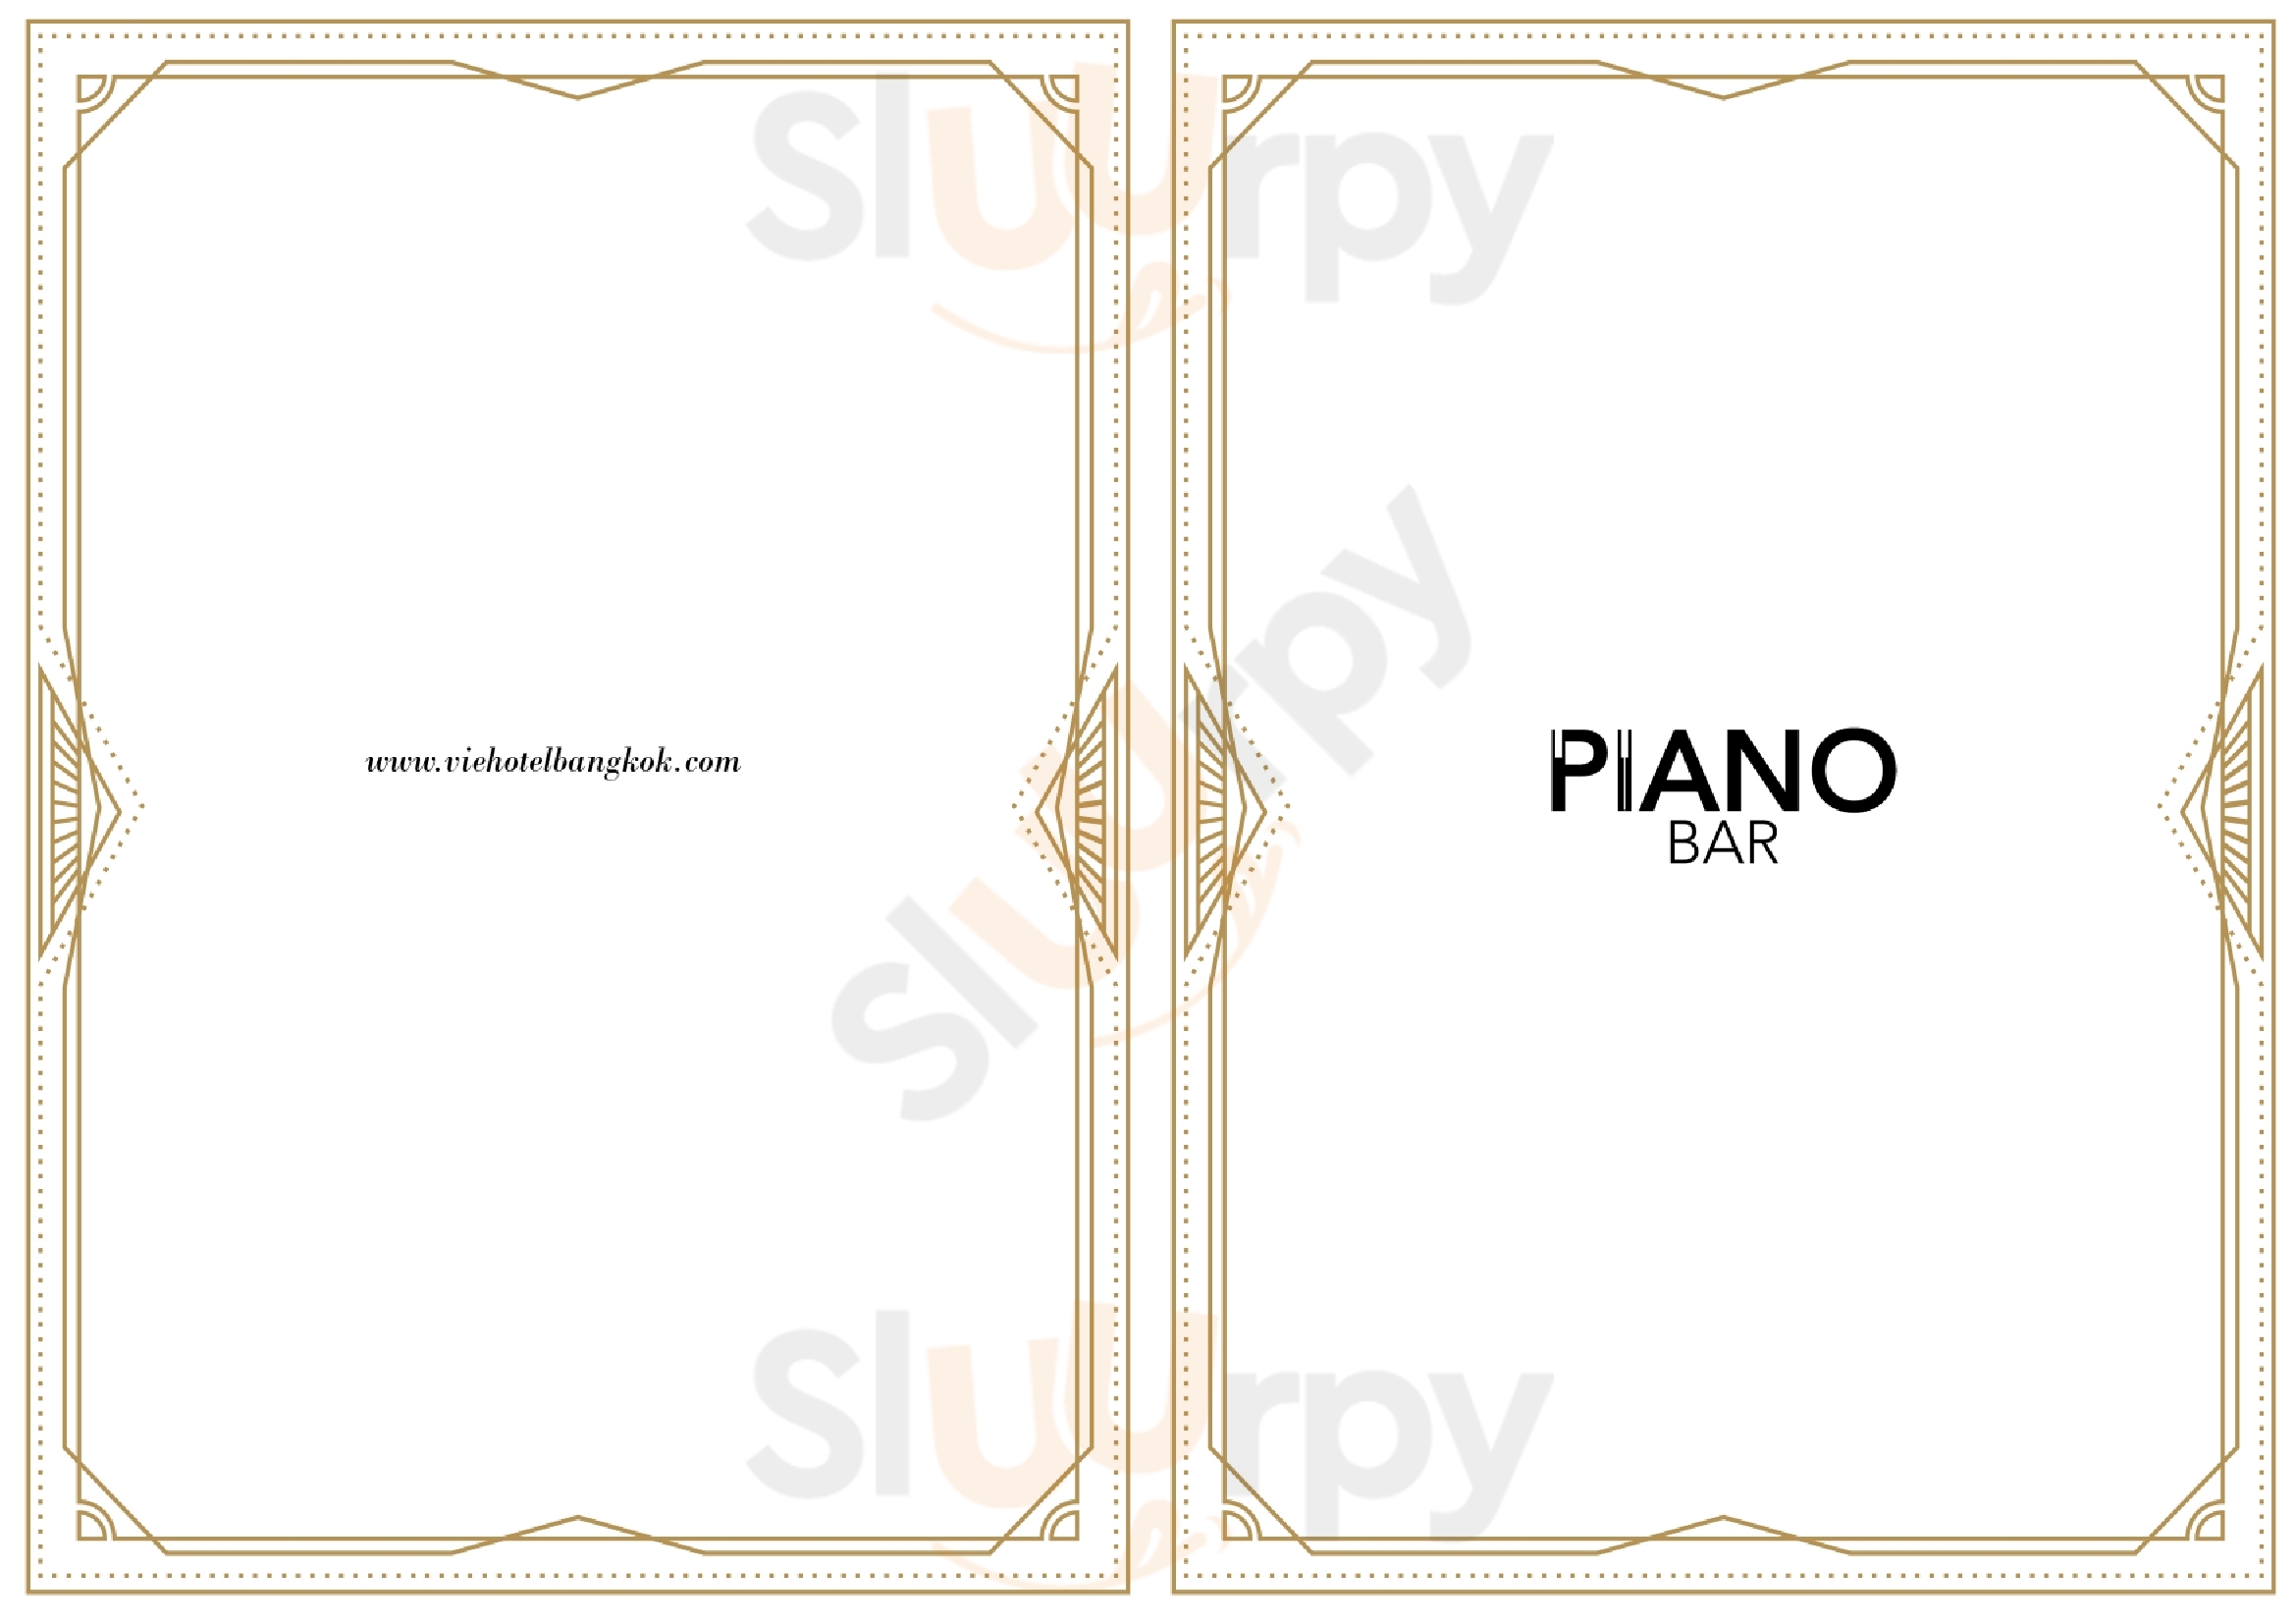 Piano Bar กรุงเทพมหานคร (กทม.) Menu - 1